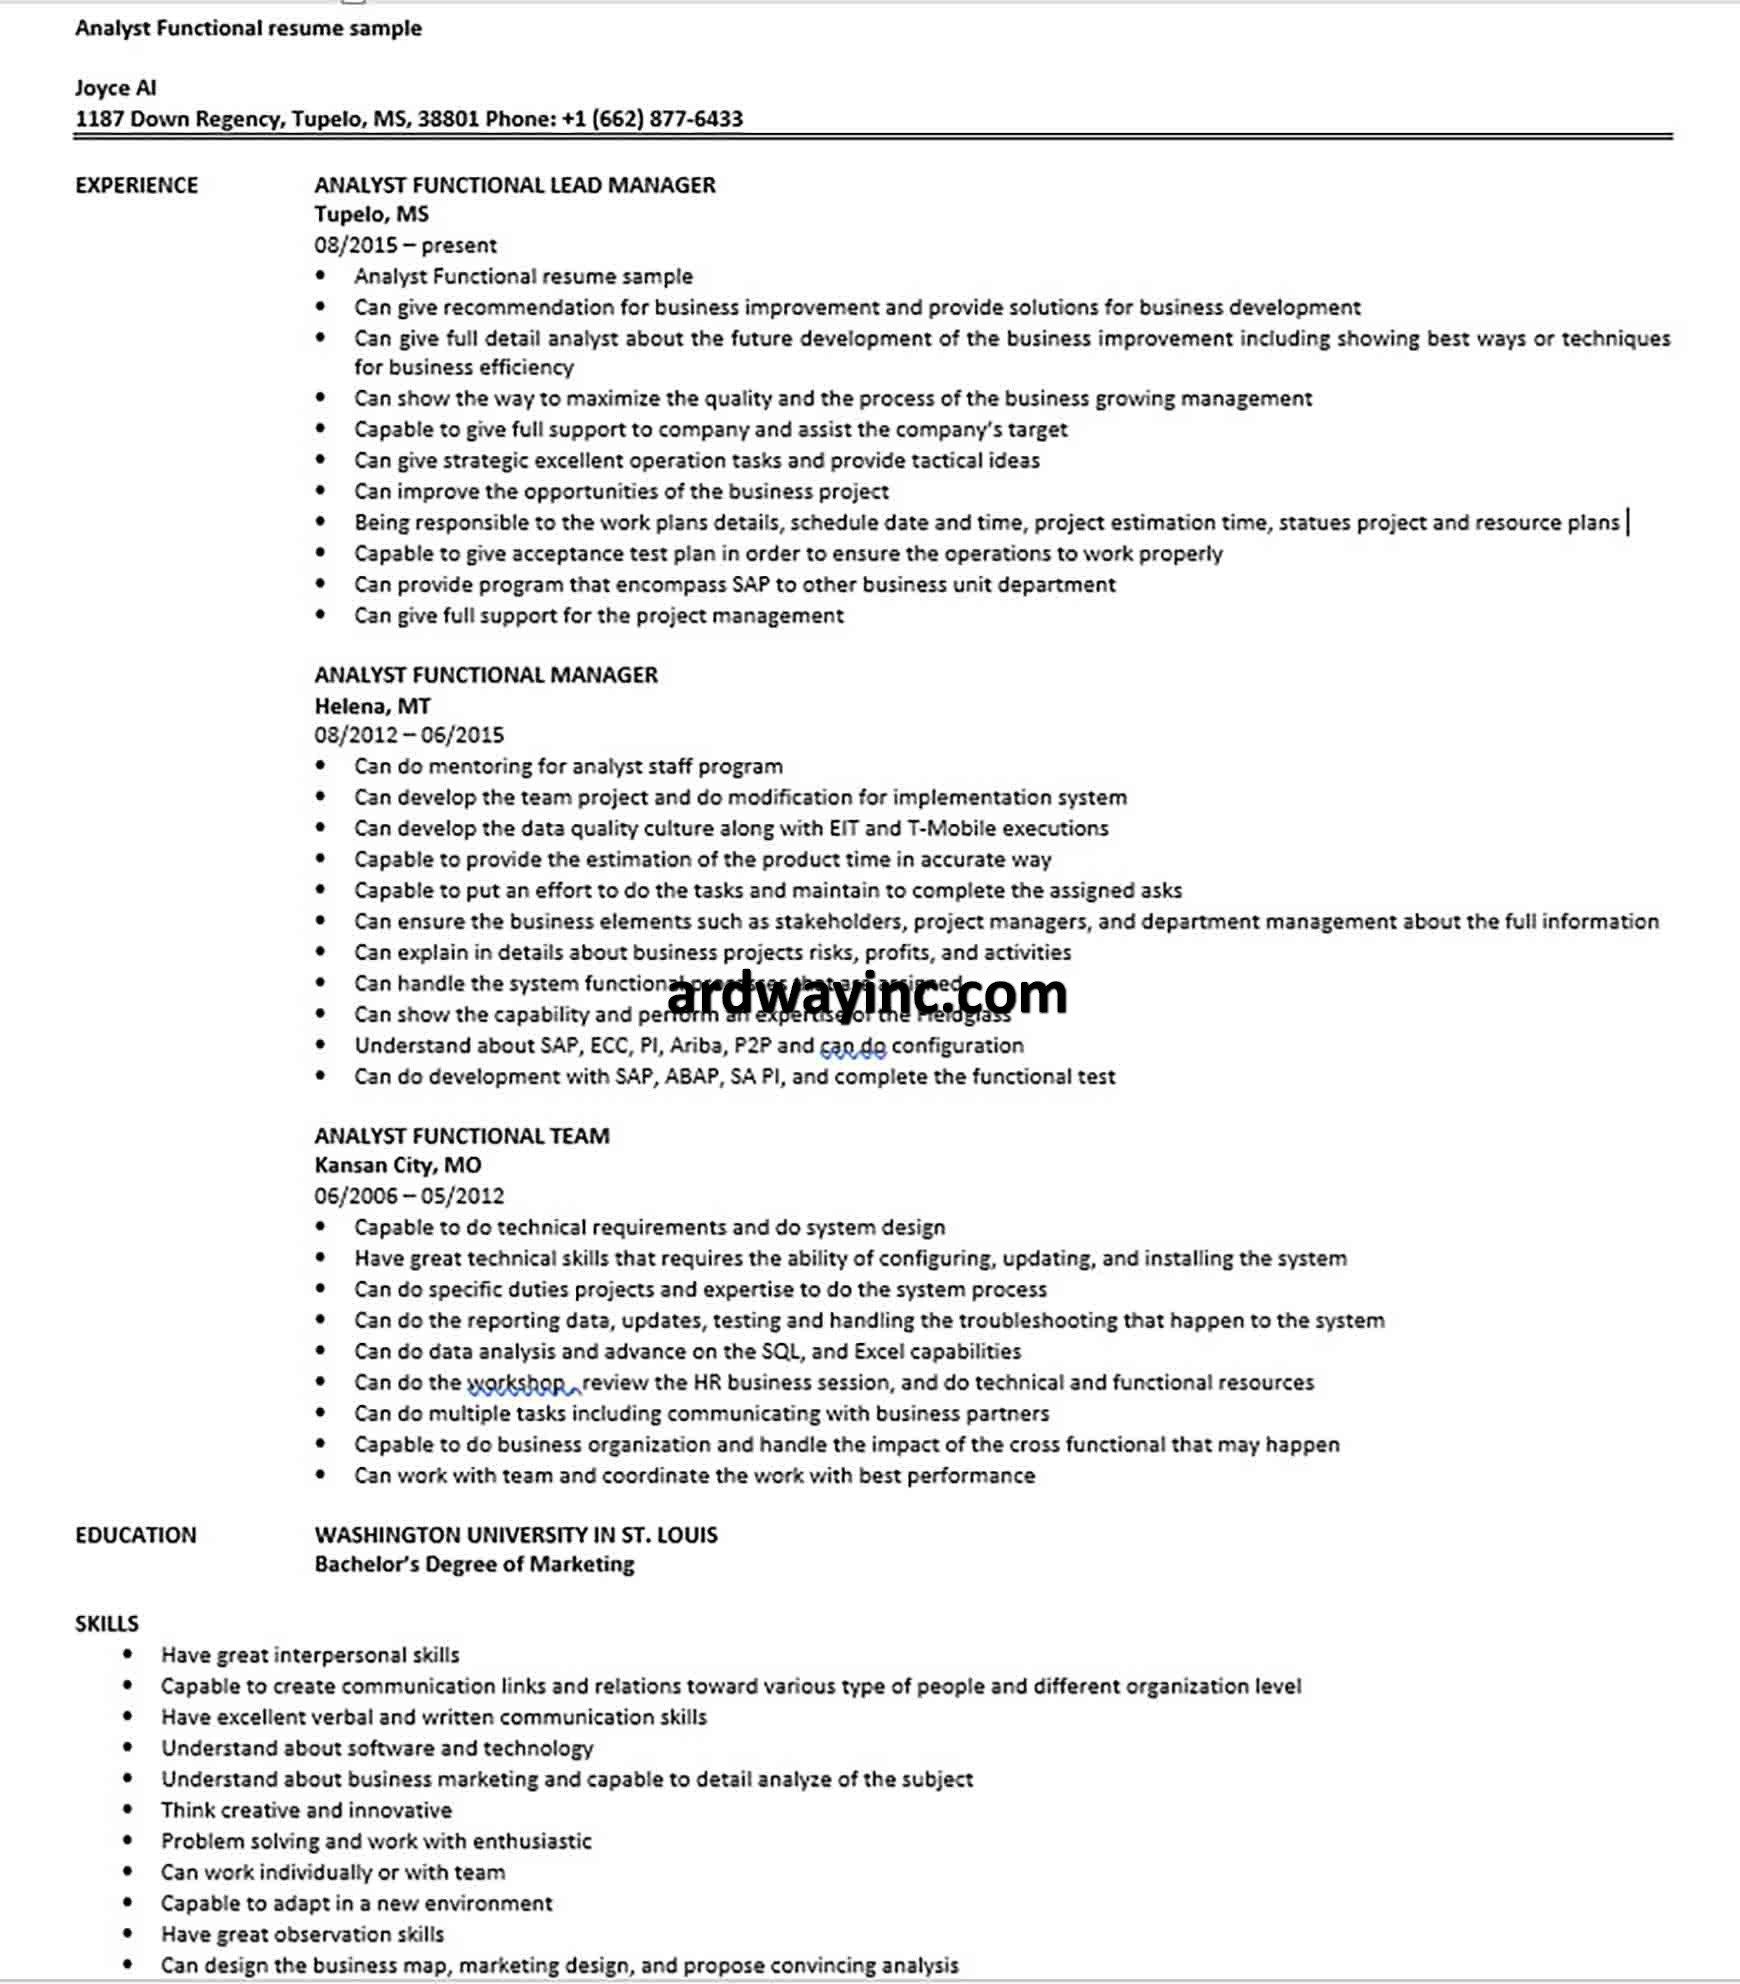 Analyst Functional resume sample